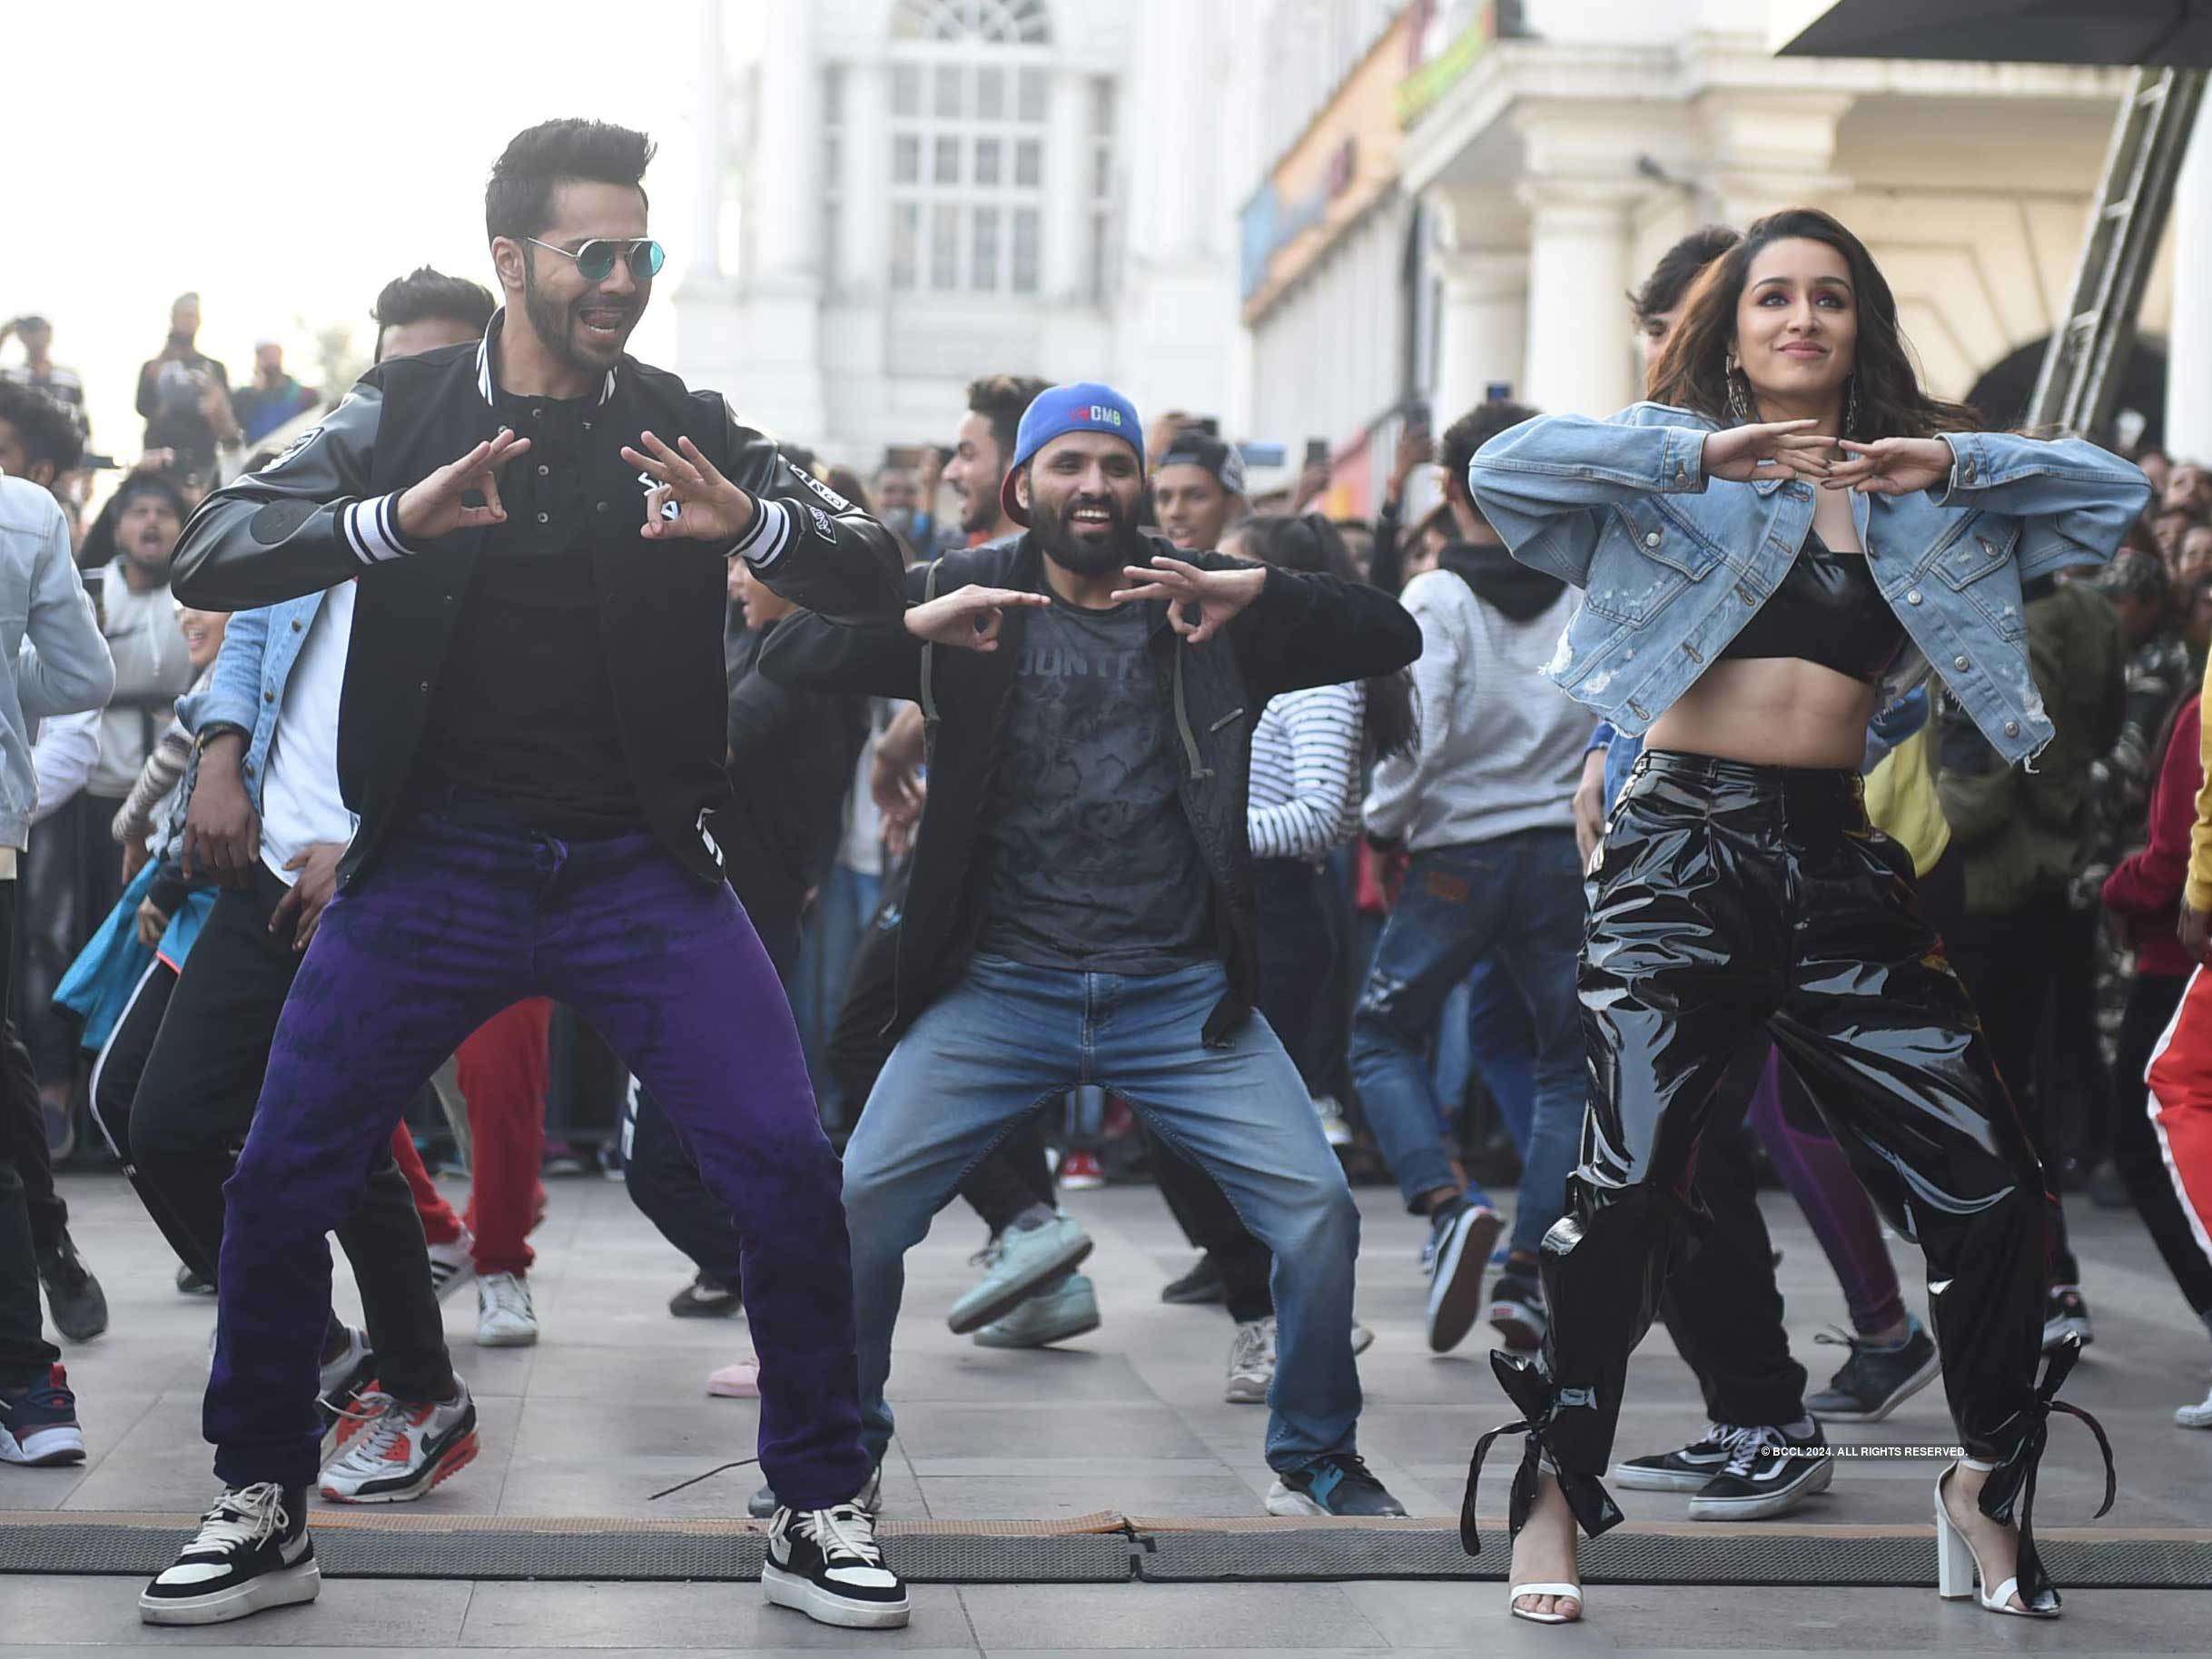 Street dancers Varun Dhawan and Shraddha Kapoor reach Delhi for 'Illegal Weapon 2.0' song launch